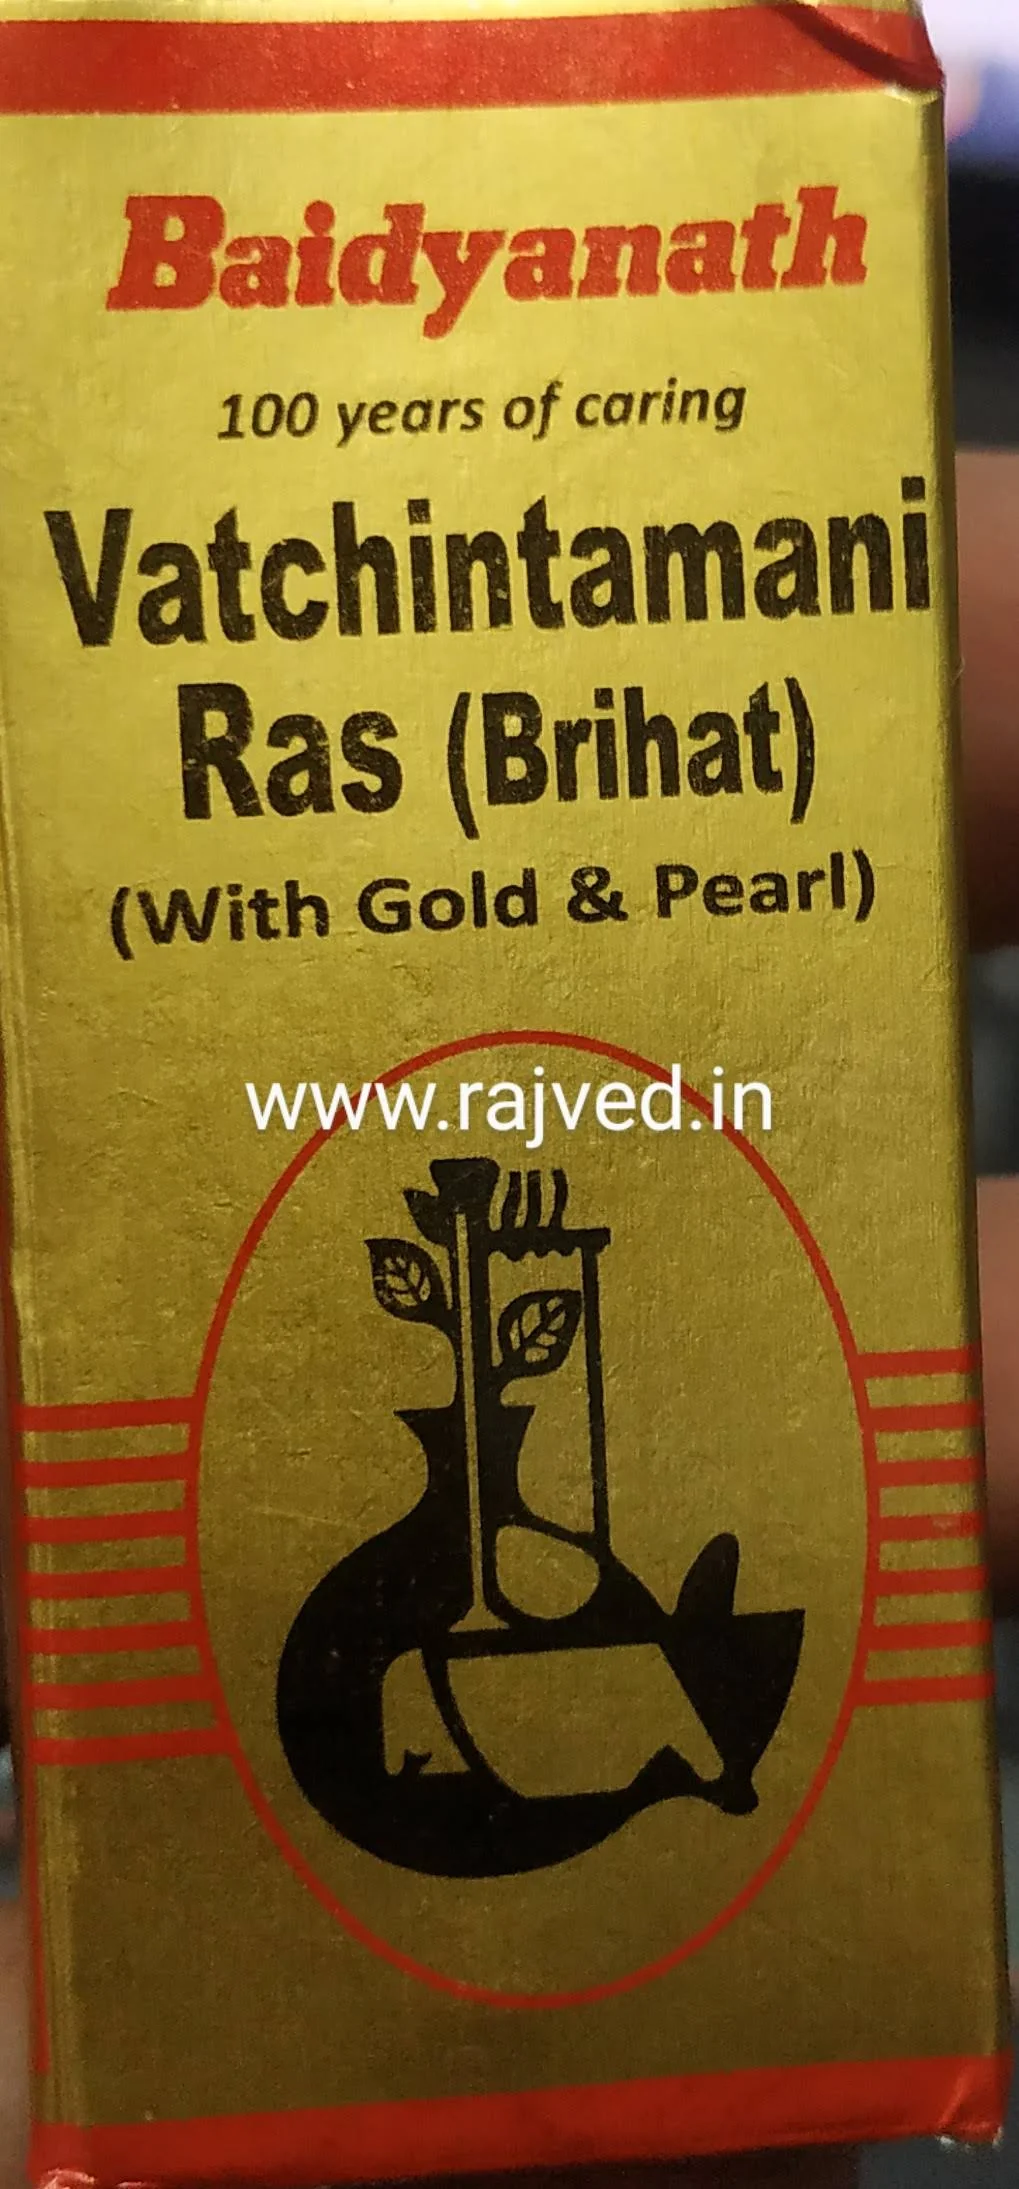 brihat vatchintamani ras with gold and pearl 20tablets shree baidyanath ayurved bhavan